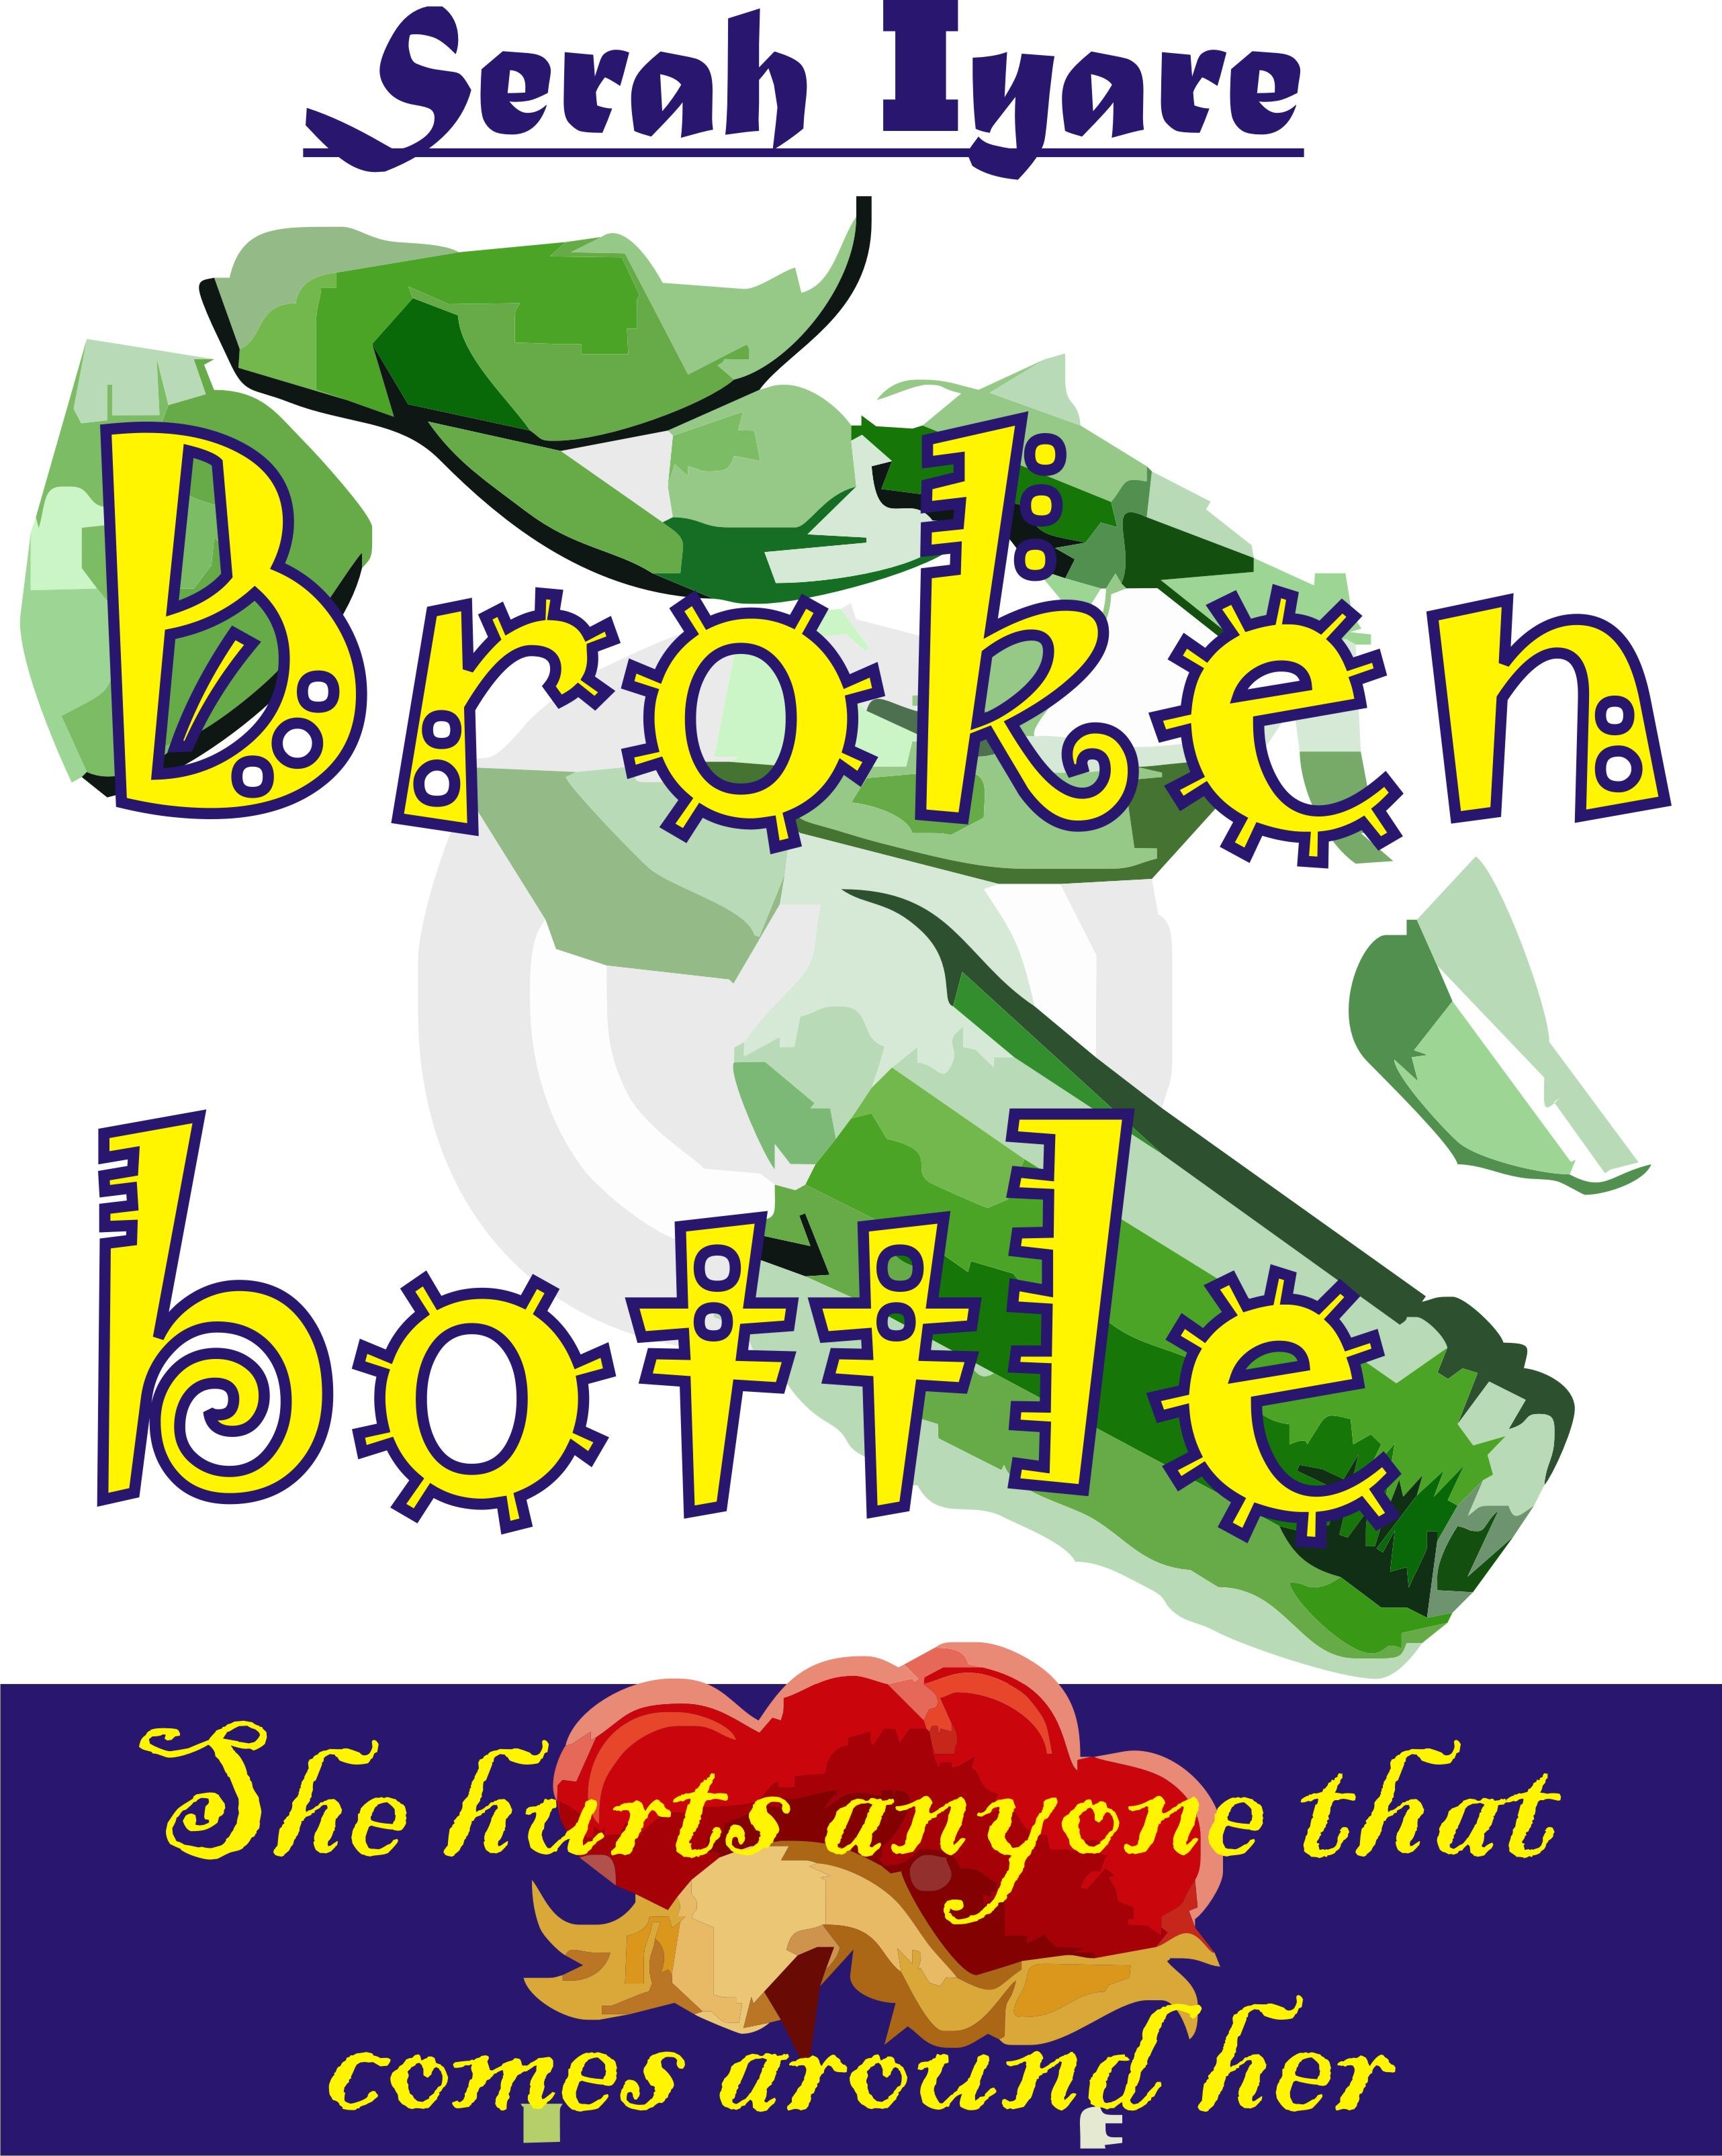 Broken-Bottle